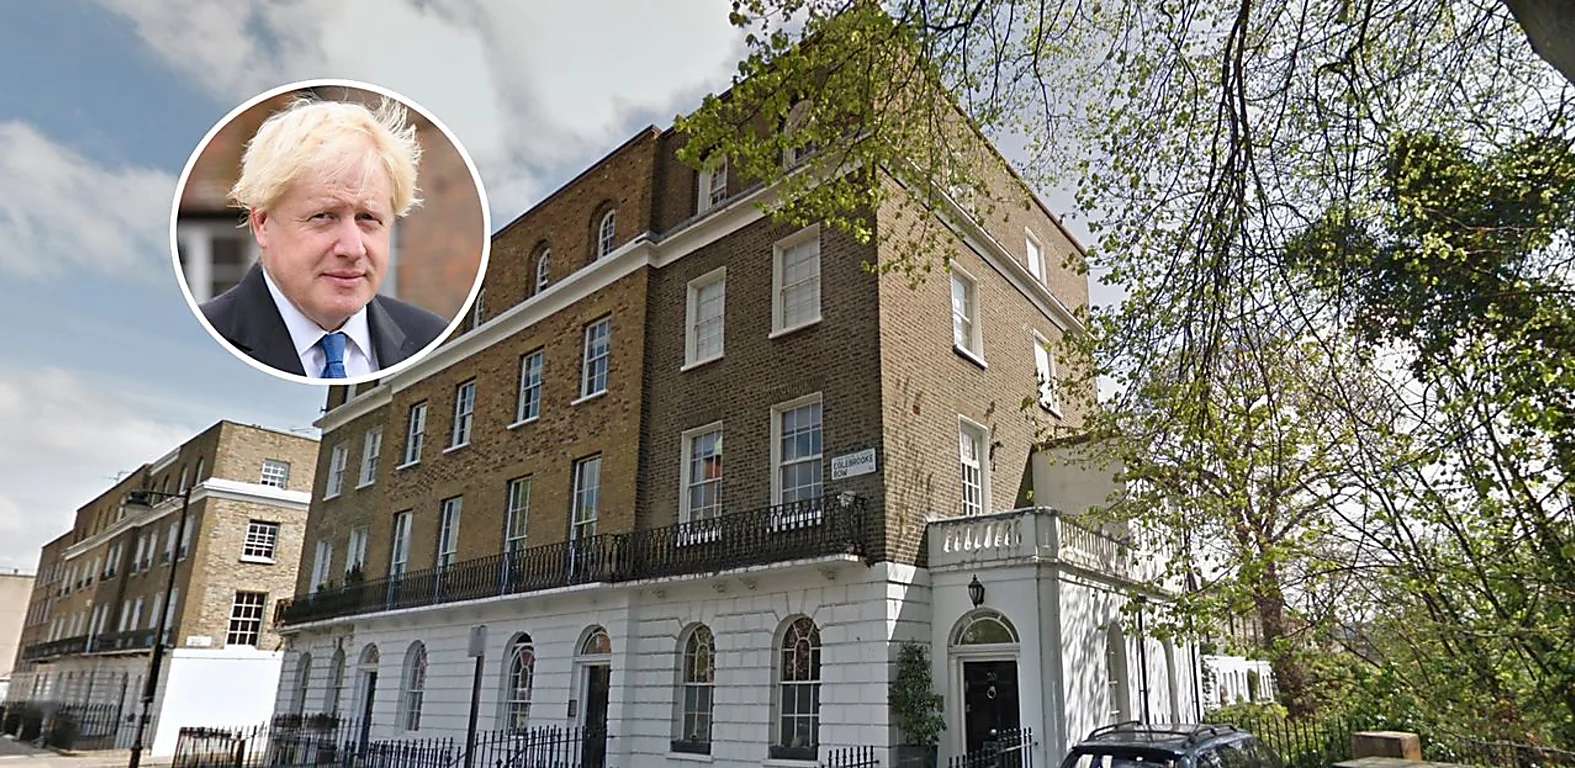 Outbrain Ad Example 45483 - U.K. Prime Minister Boris Johnson Sells London Home